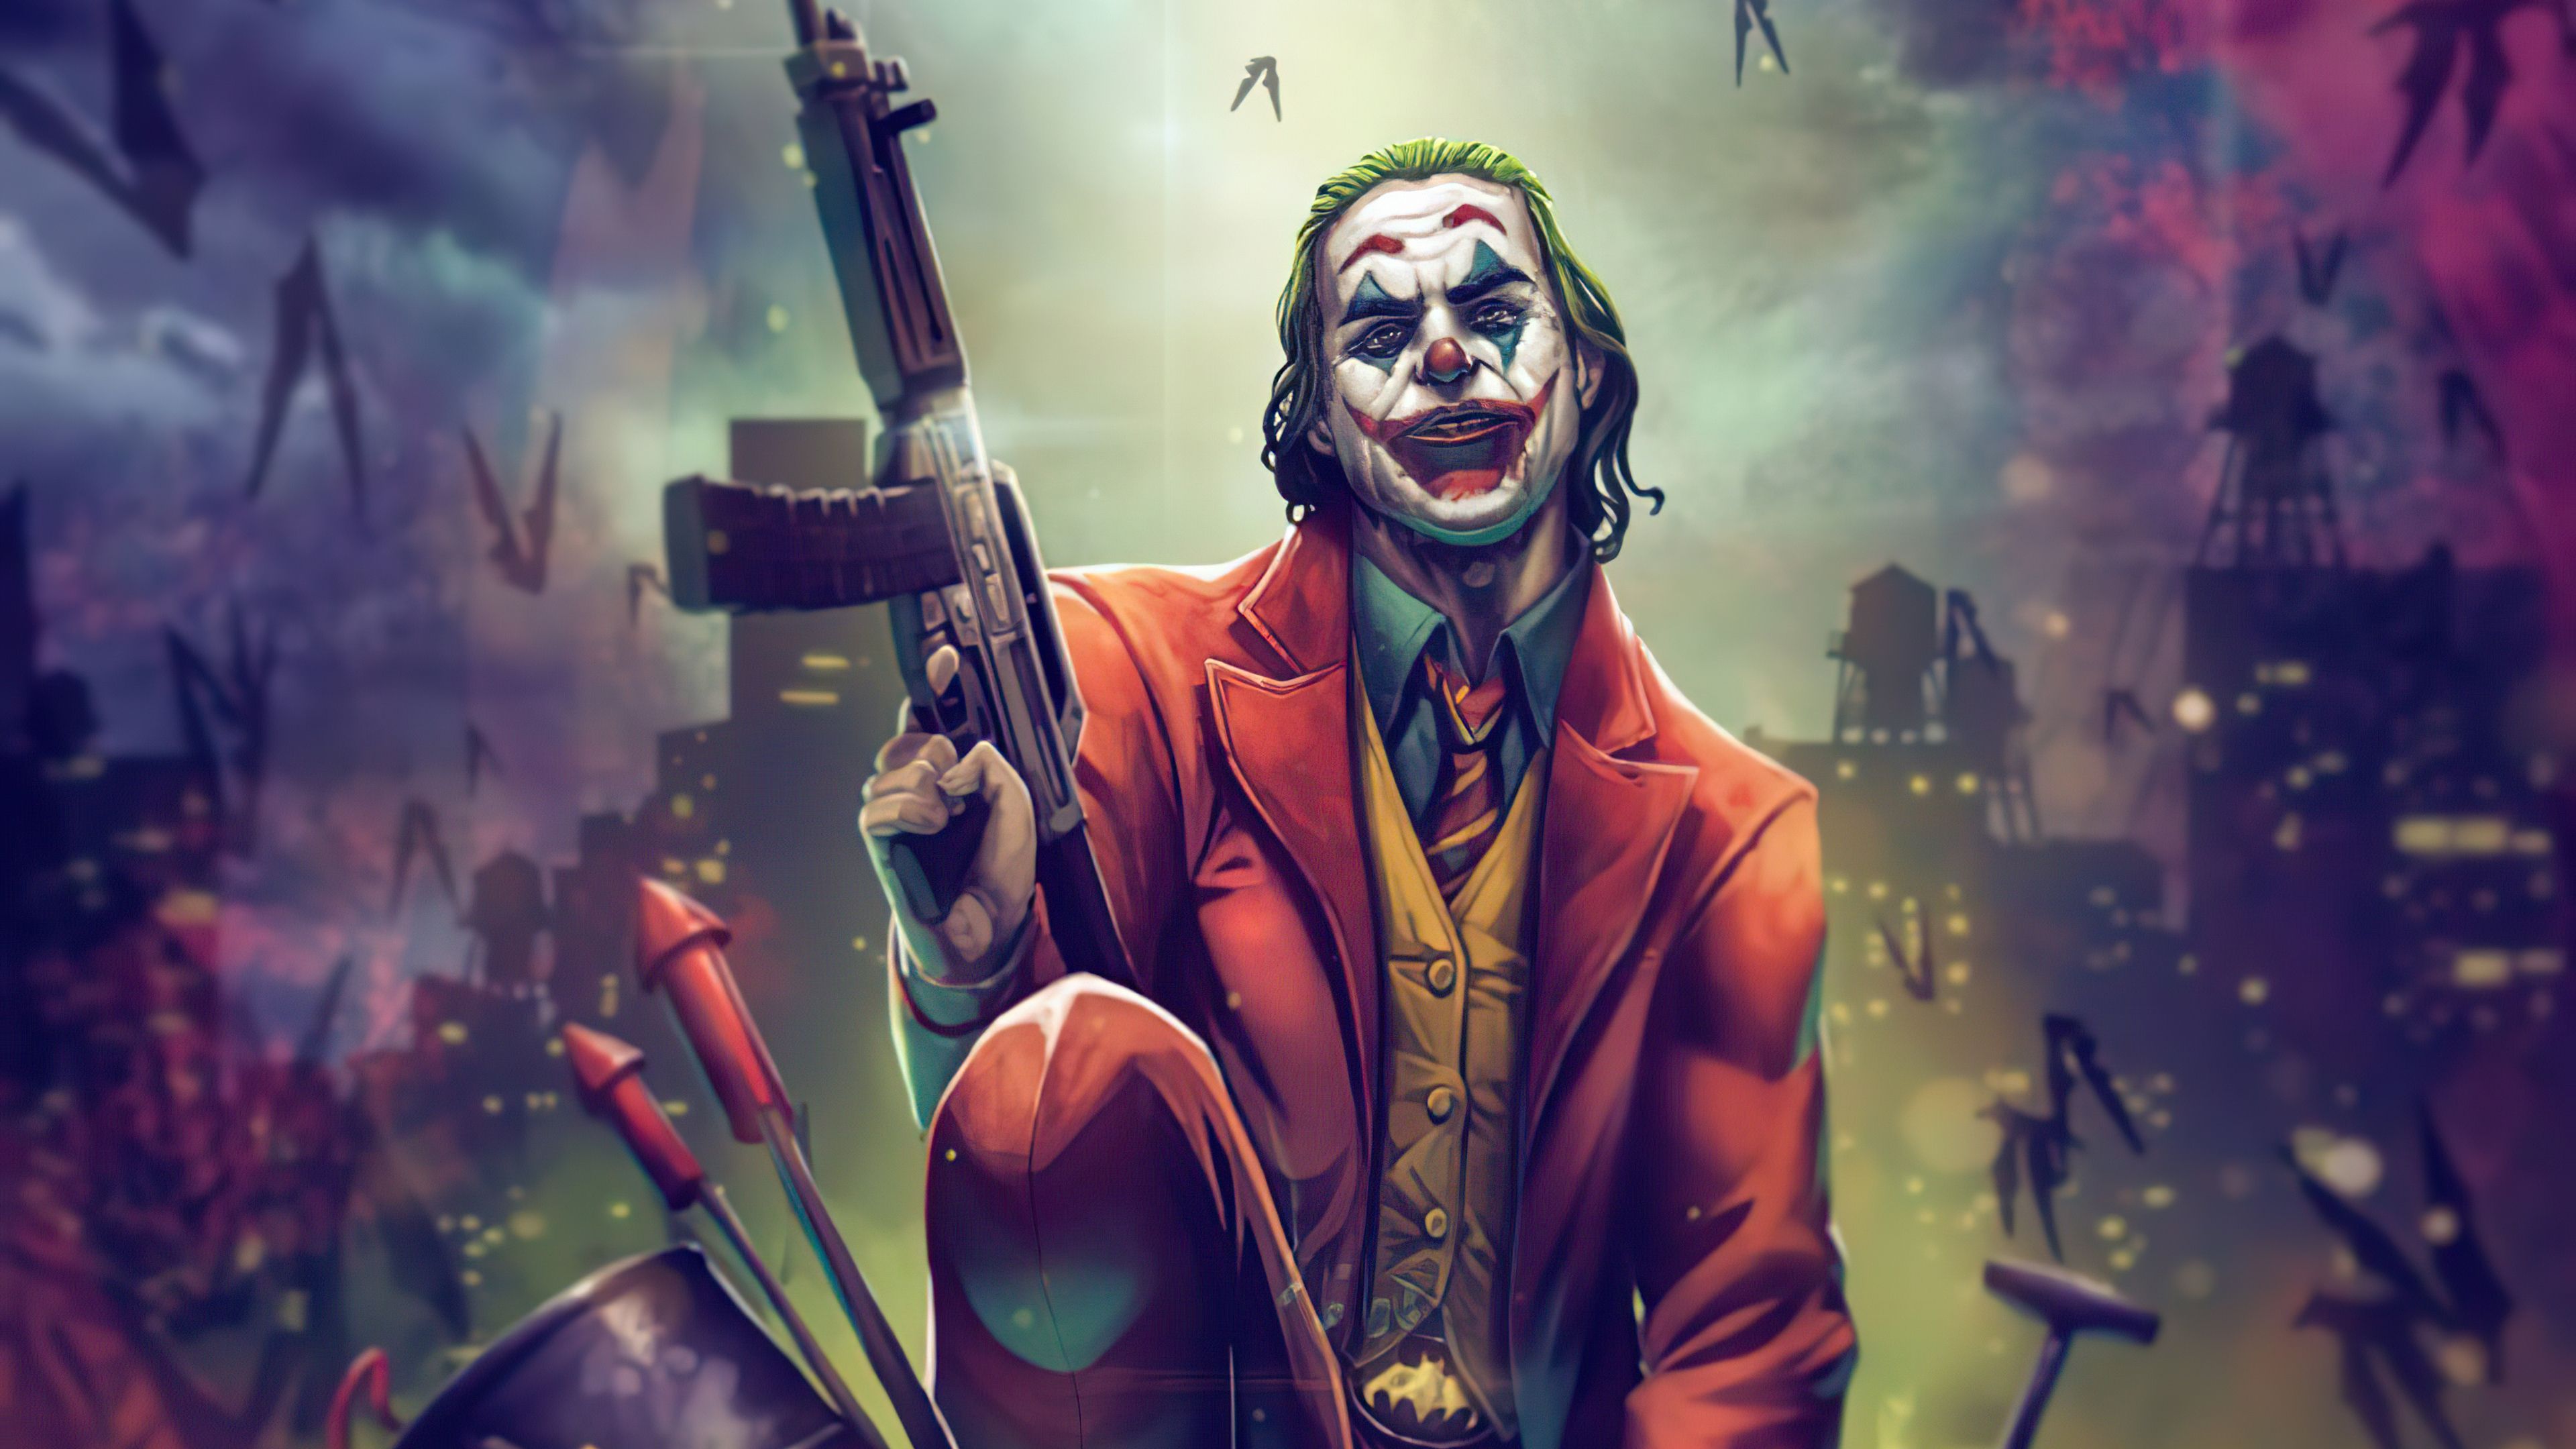 DC Joker Art Wallpaper, HD Superheroes 4K Wallpaper, Image